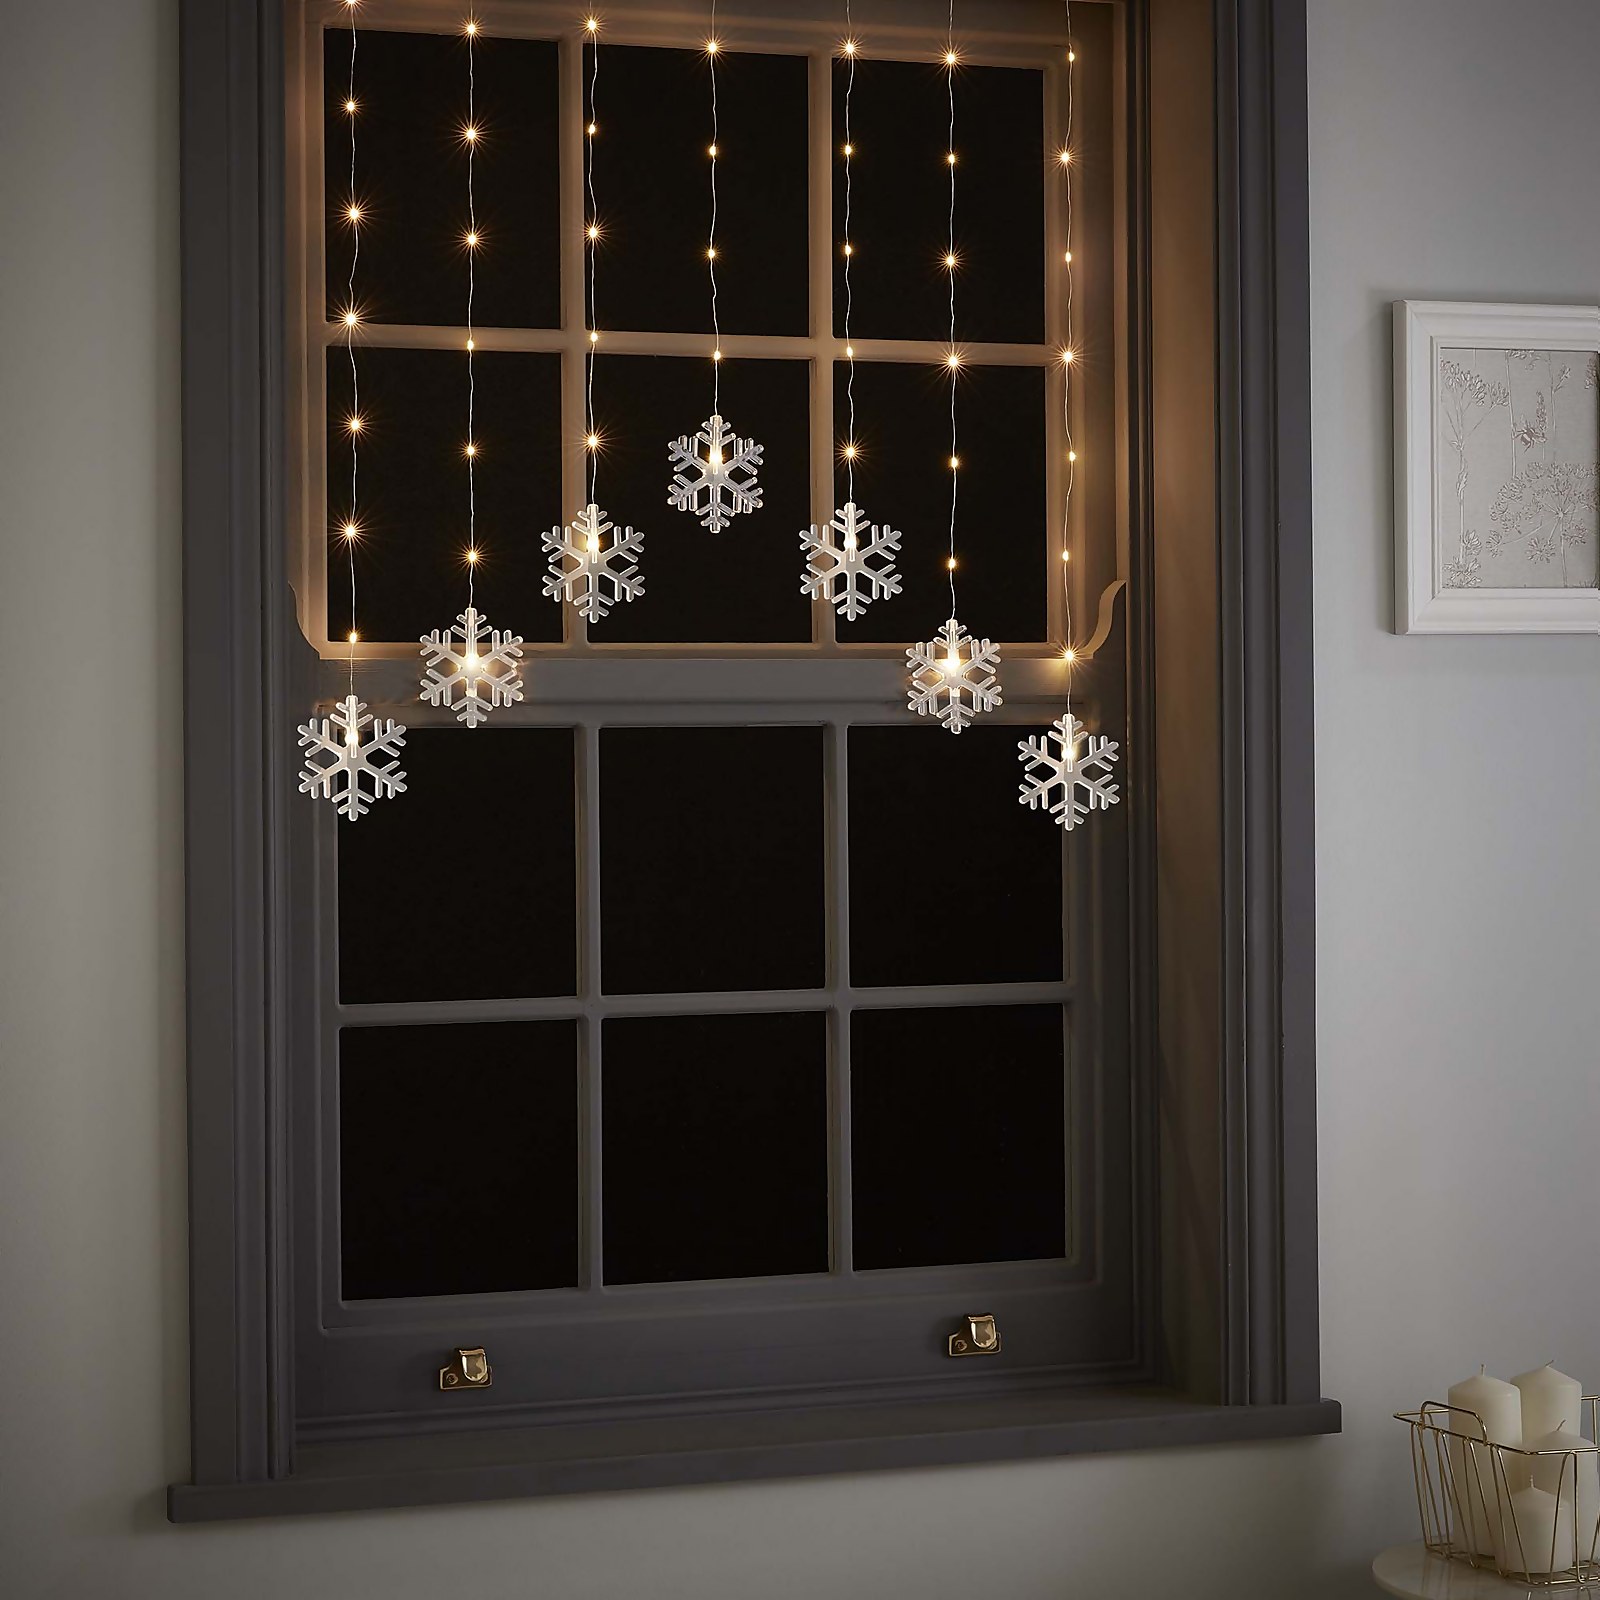 Photo of Snowflake Led Pinwire Christmas Window Curtain Light